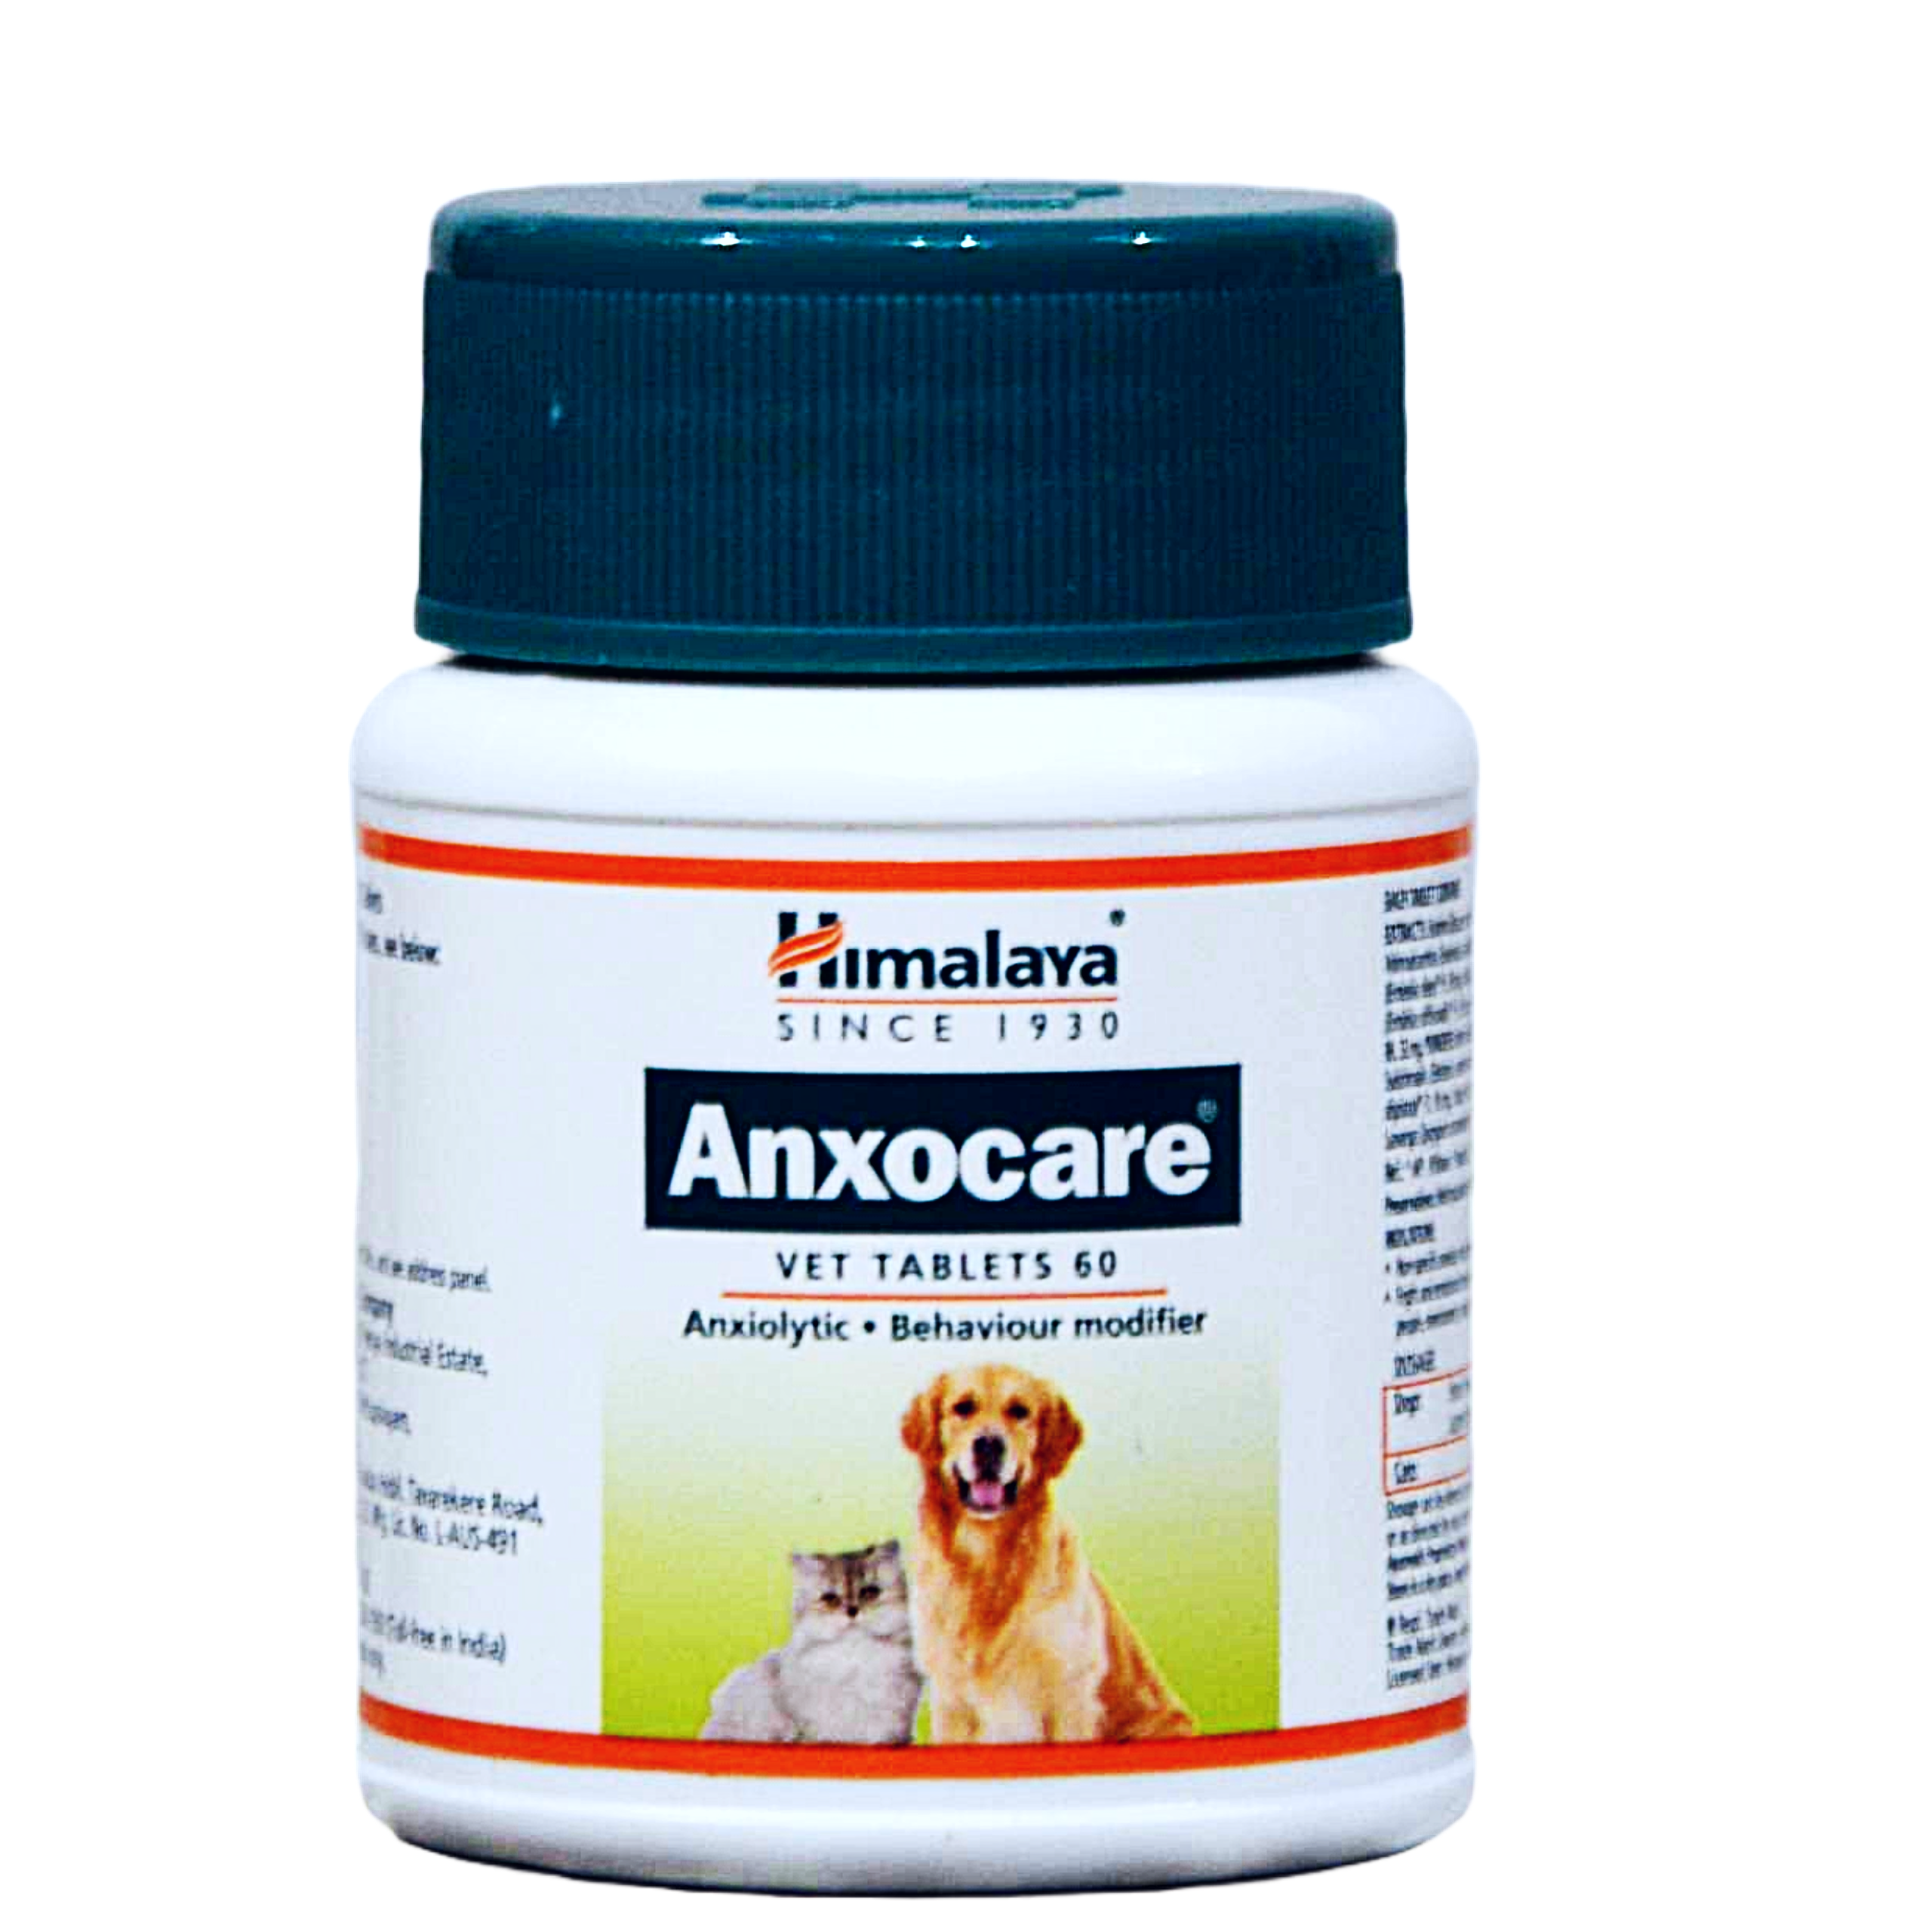 Himalaya Anxocare vet tablets 60